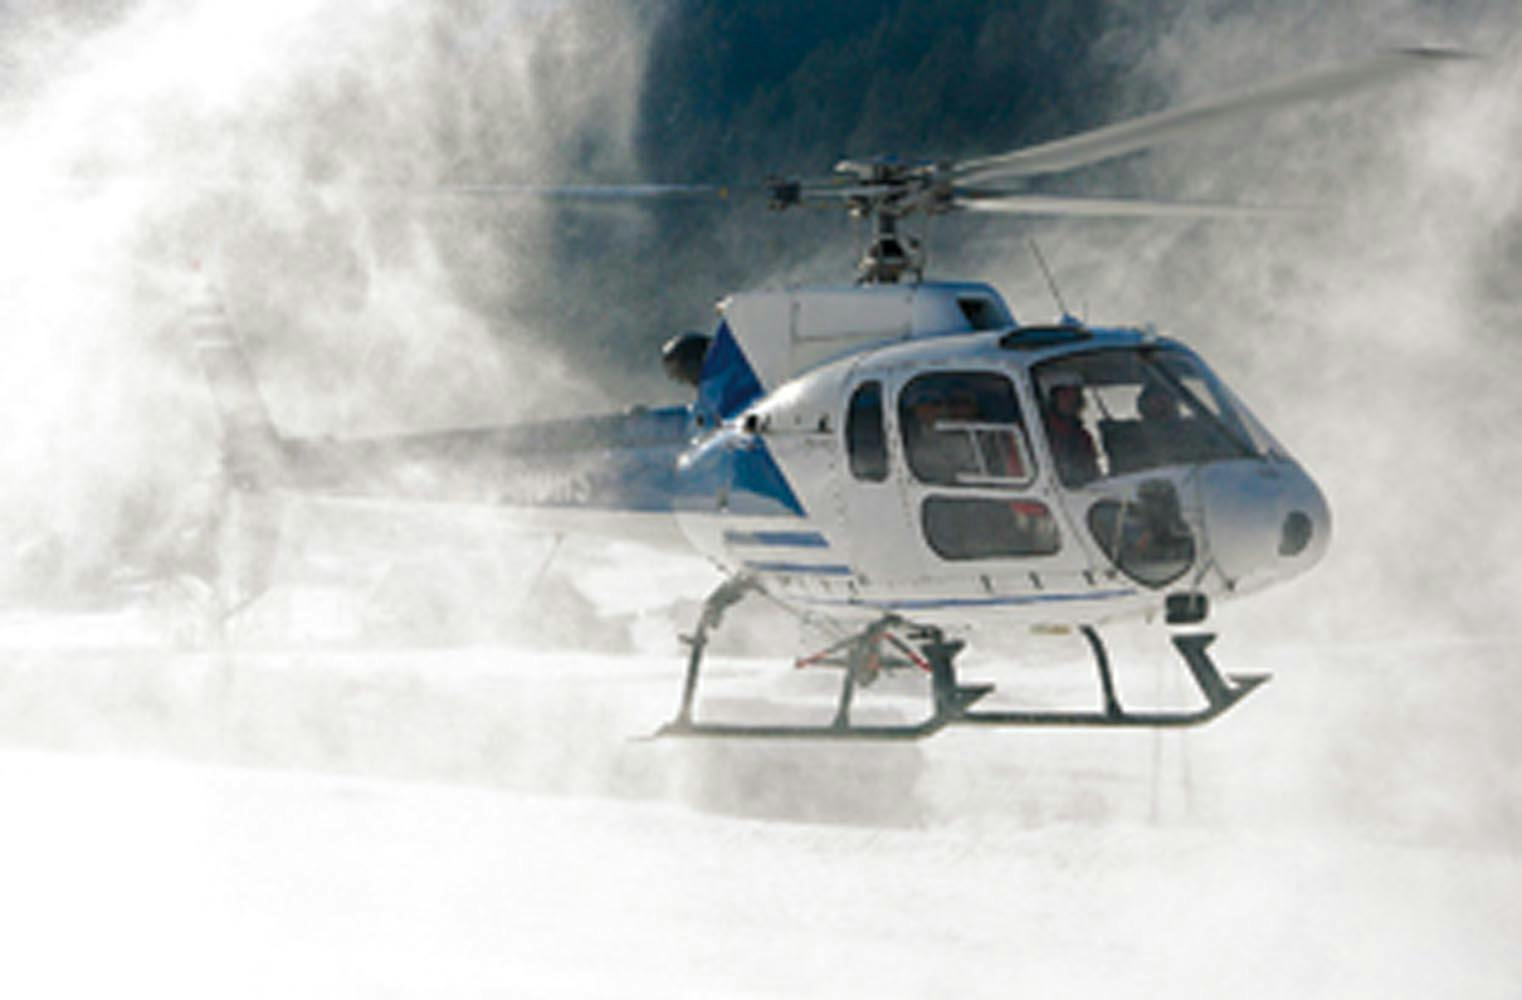 Helikopterflug | Alpen und Seenlandschaft | ca. 60 Minuten